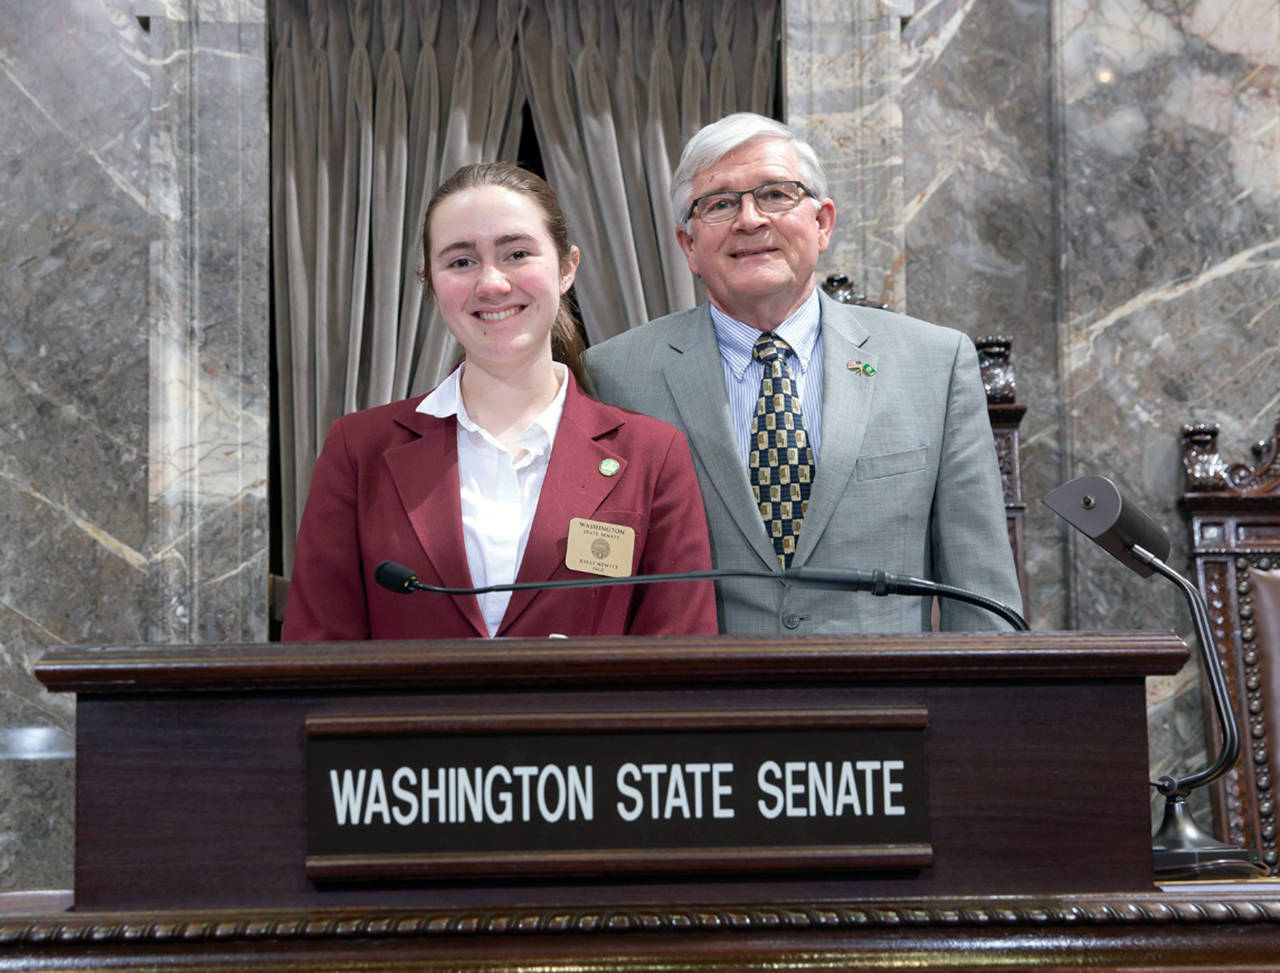 Monte student serves as Senate page